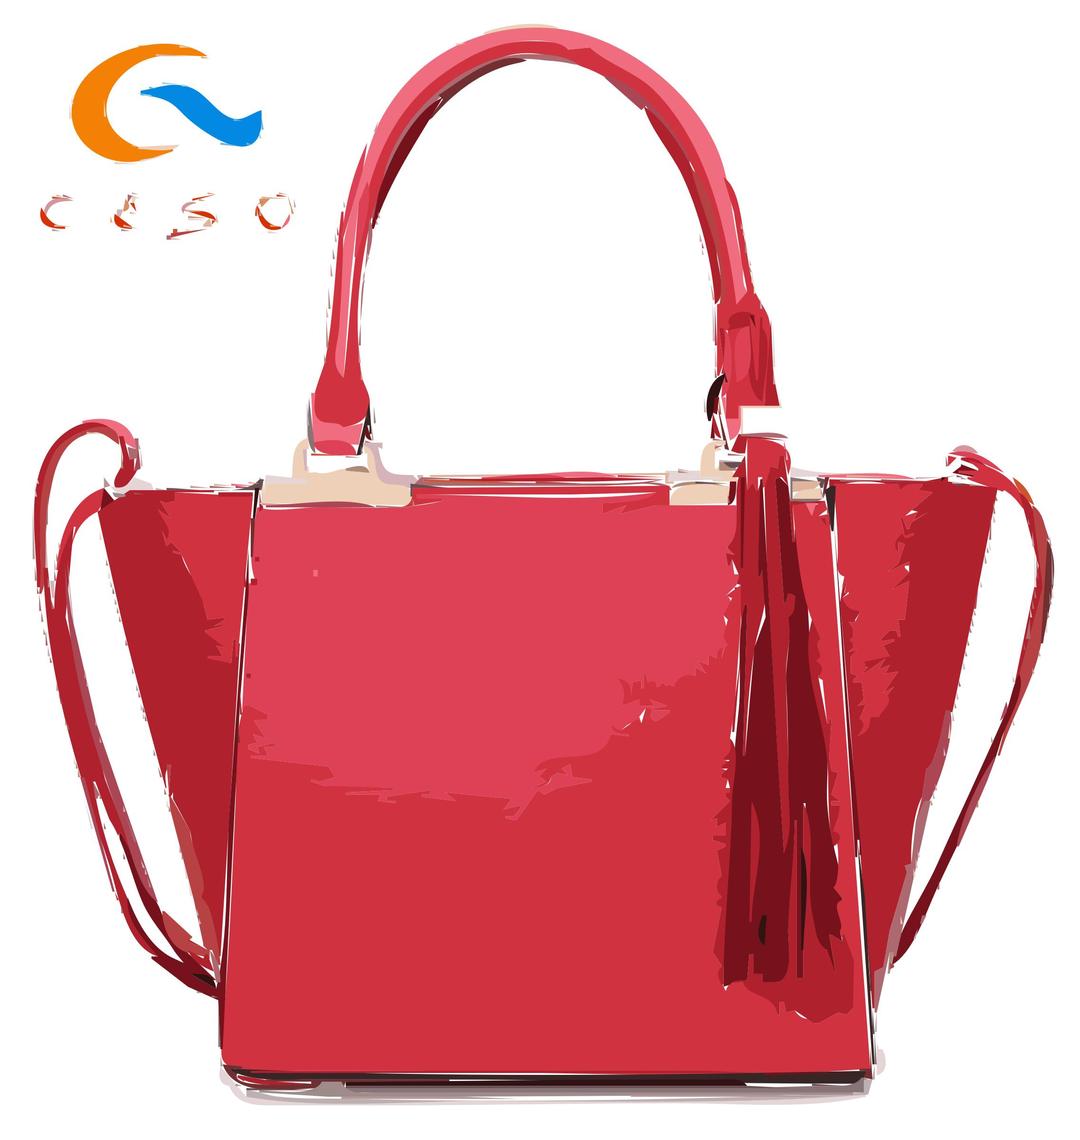 Pink Bag with Tassles and Logo png transparent